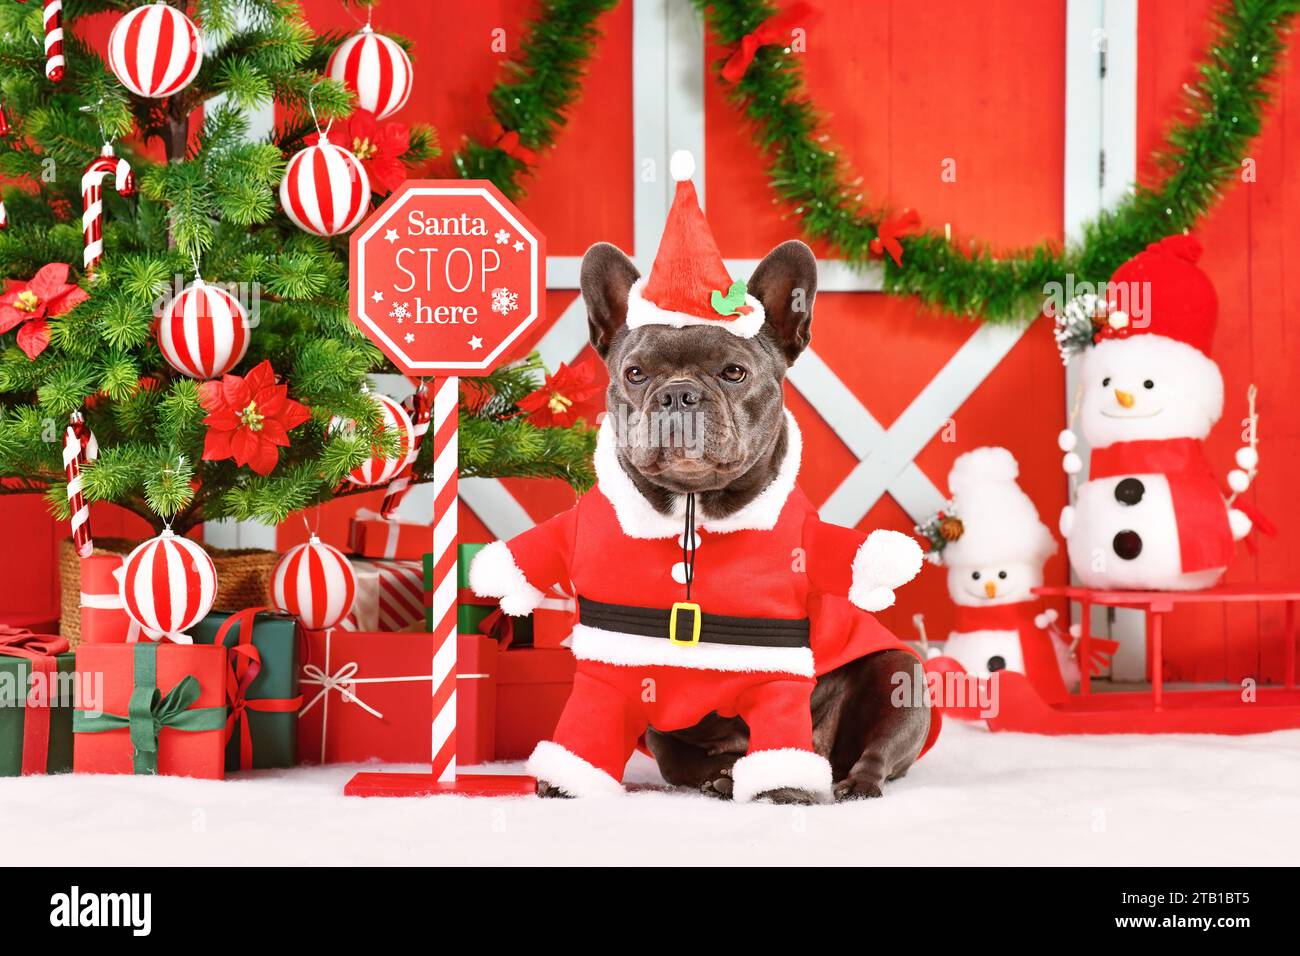 French Bulldog wearing Santa Claus dog costume next to seasonal decorations with Christmas tree Stock Photo